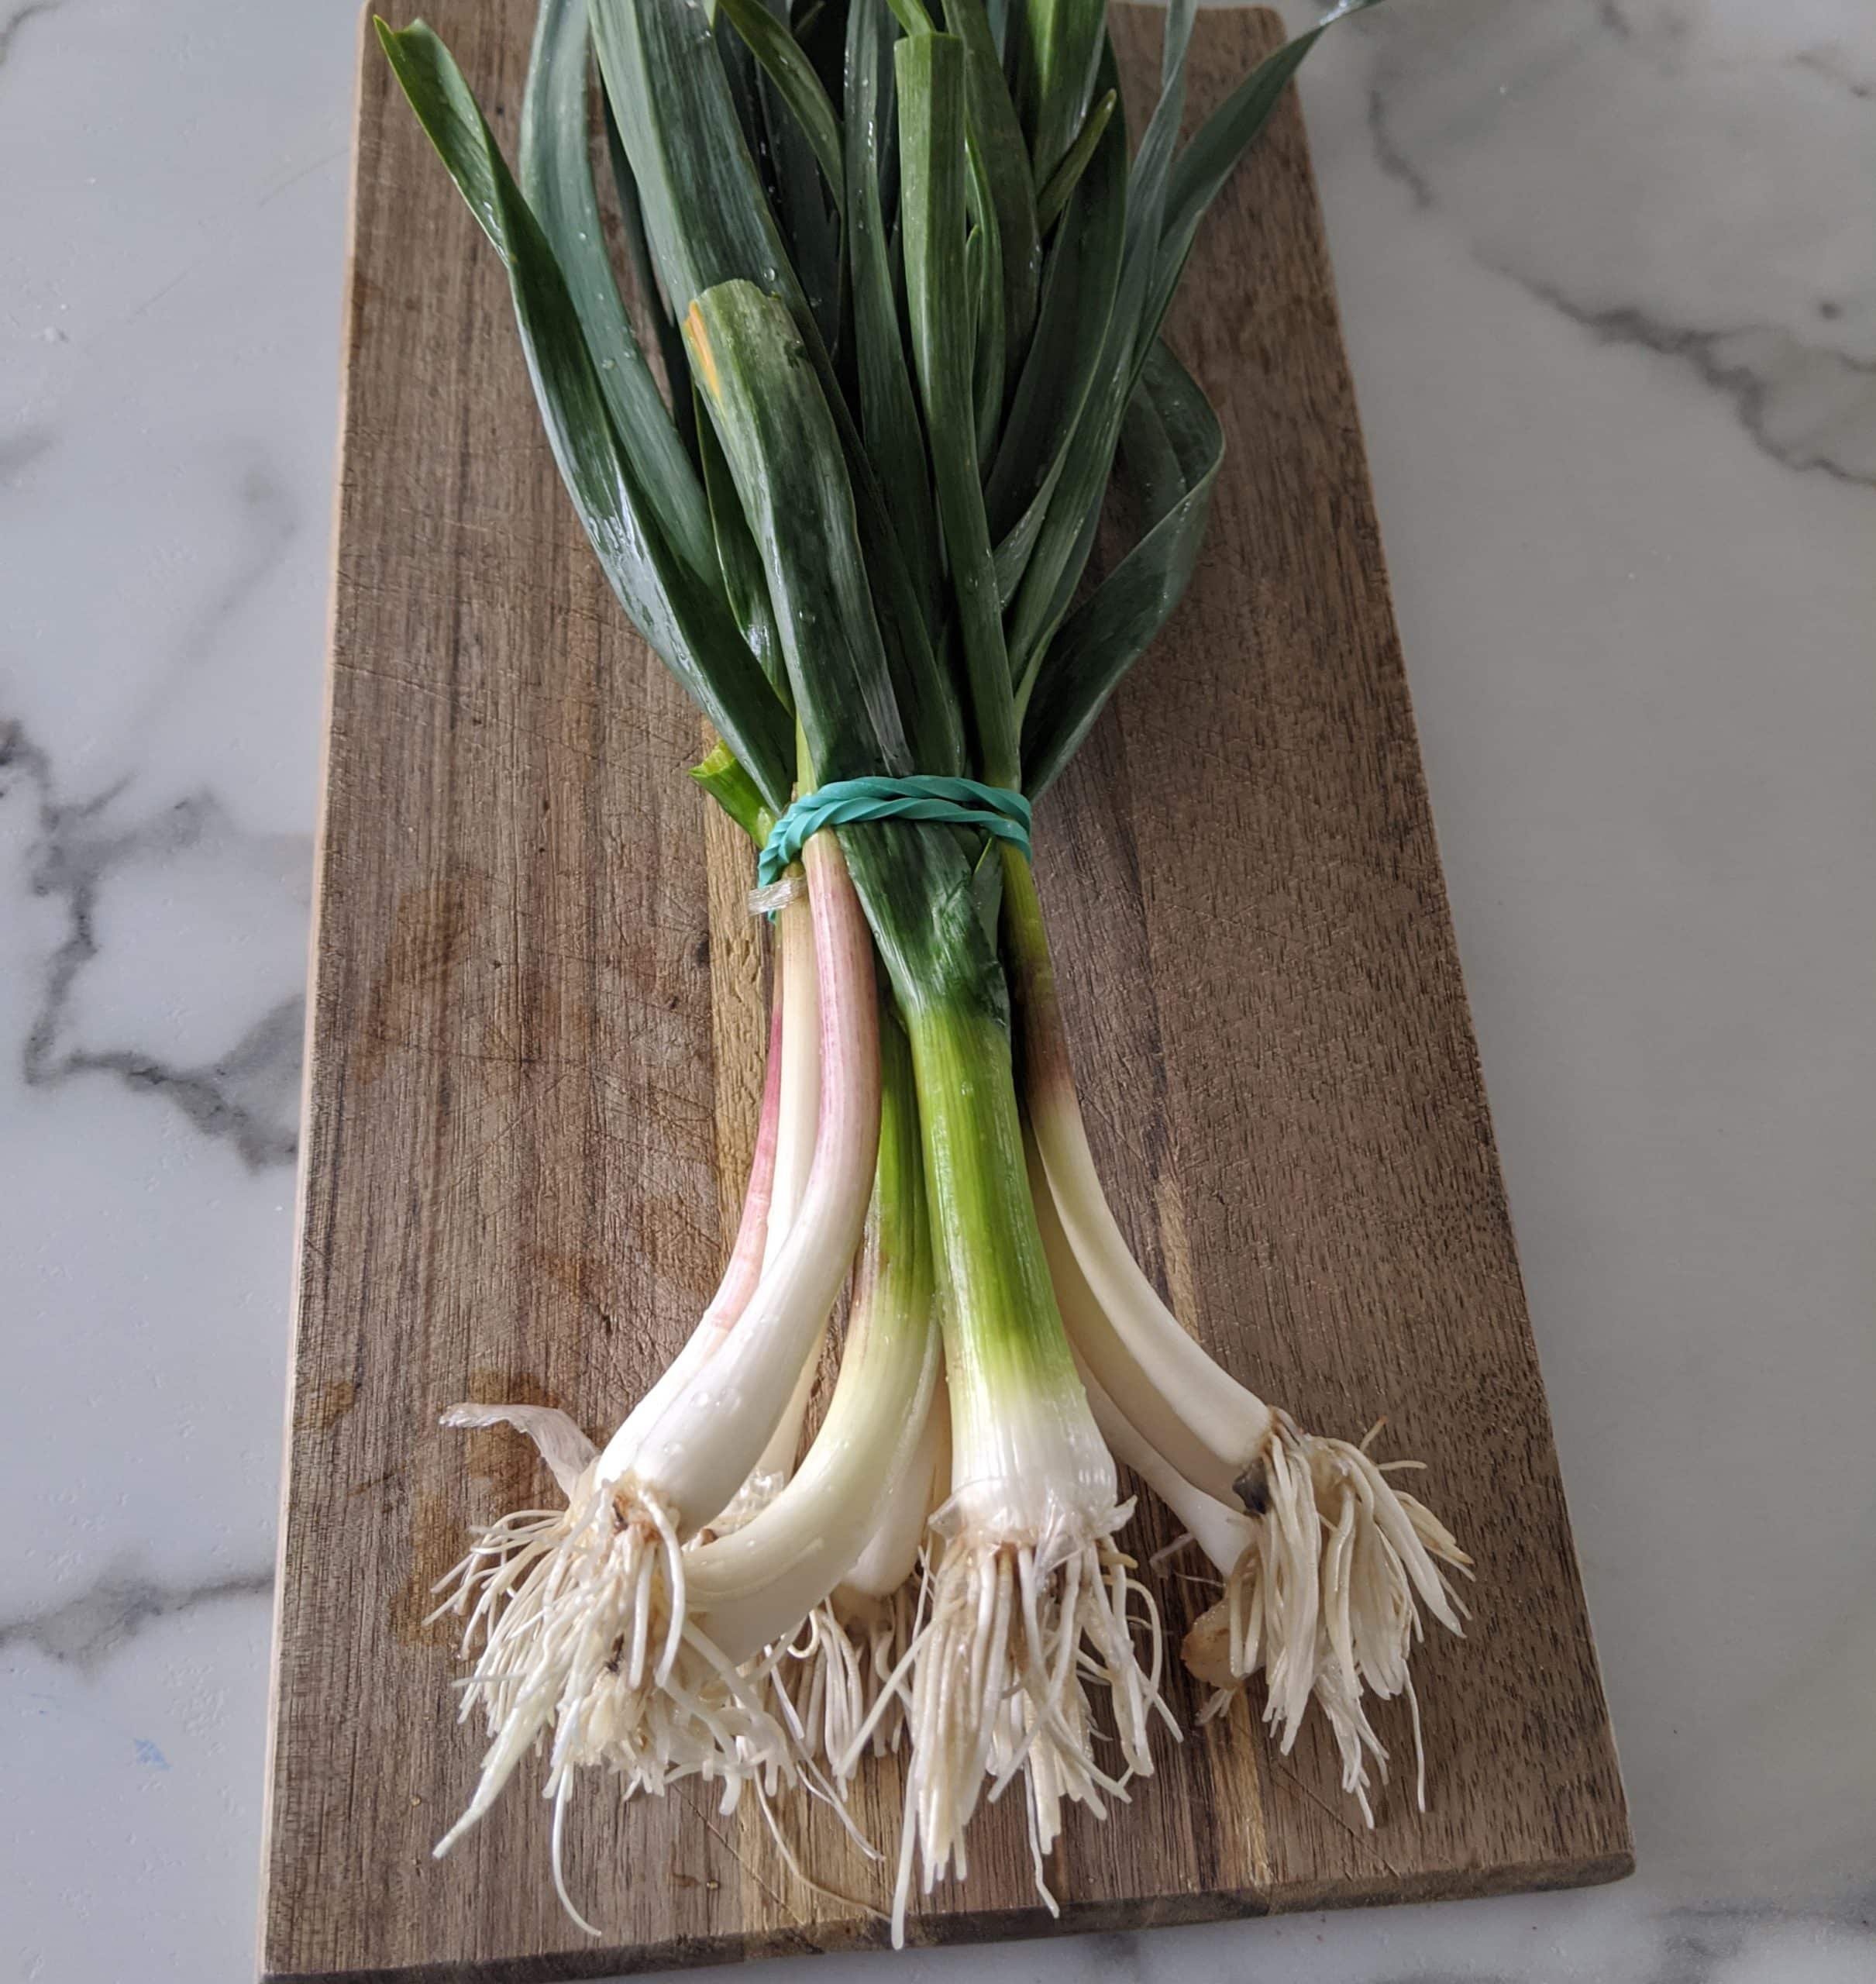 Young green garlic